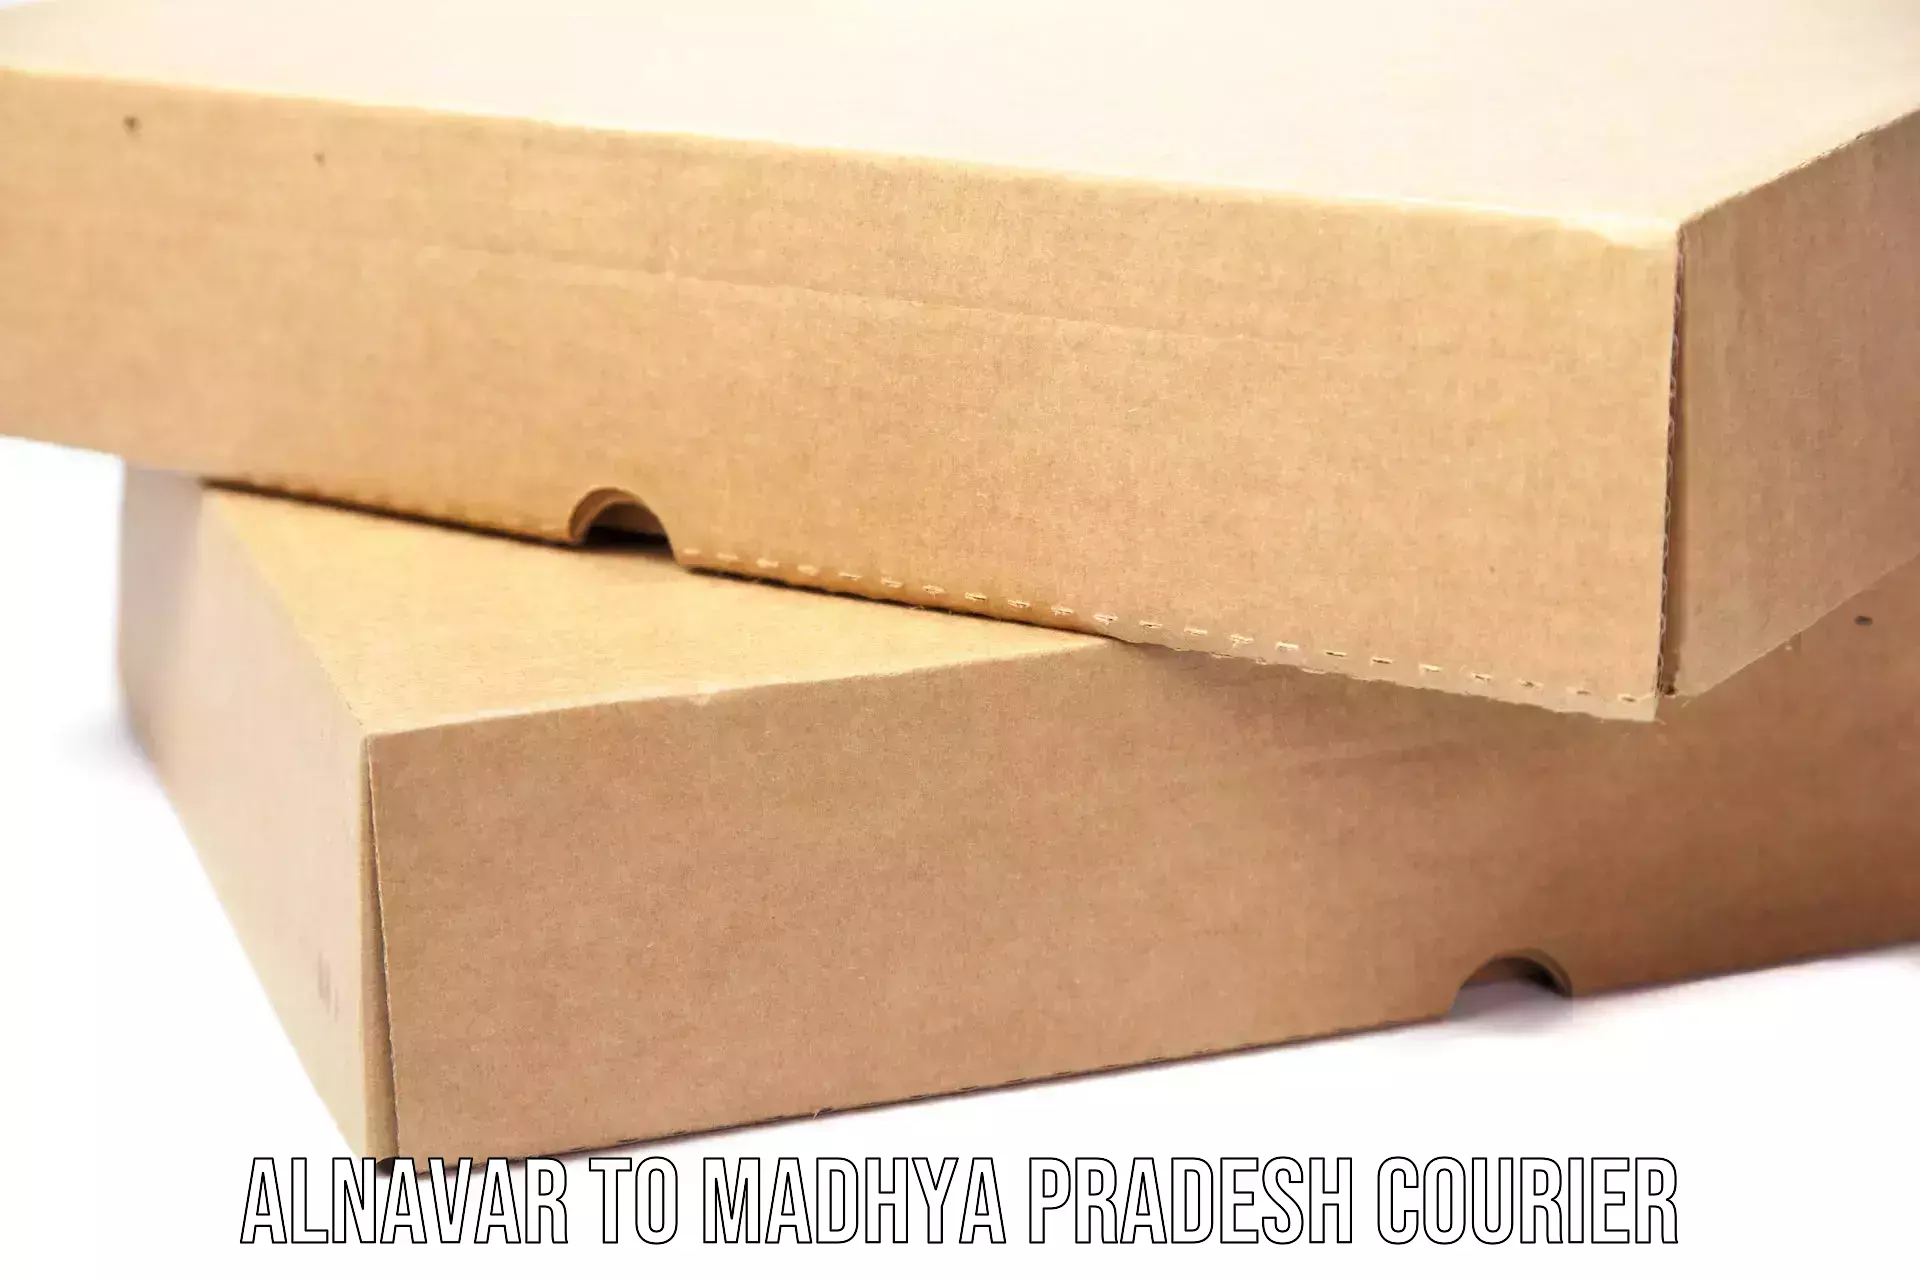 Express package handling Alnavar to Madhya Pradesh